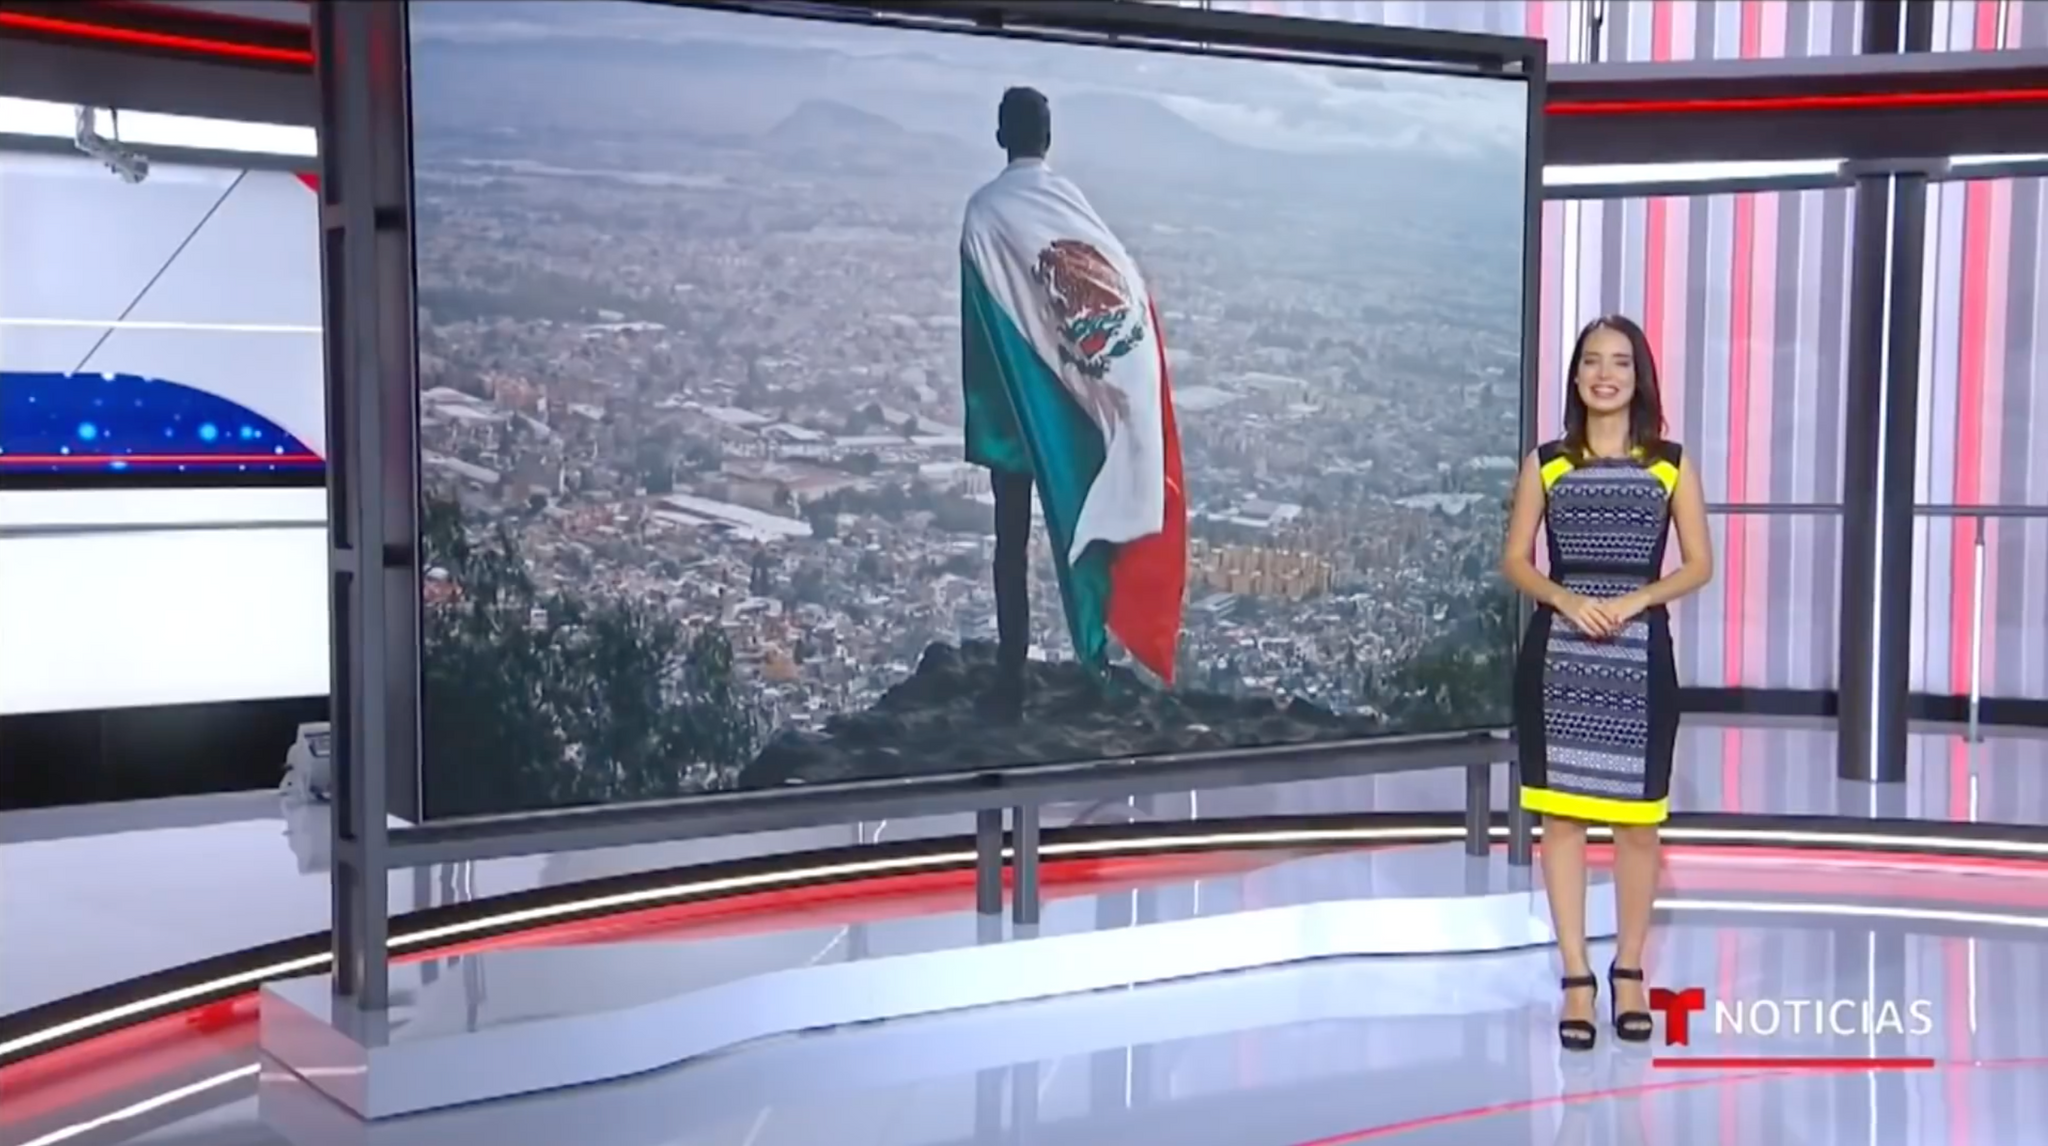 Telemundo Noticias about MEX I CAN.